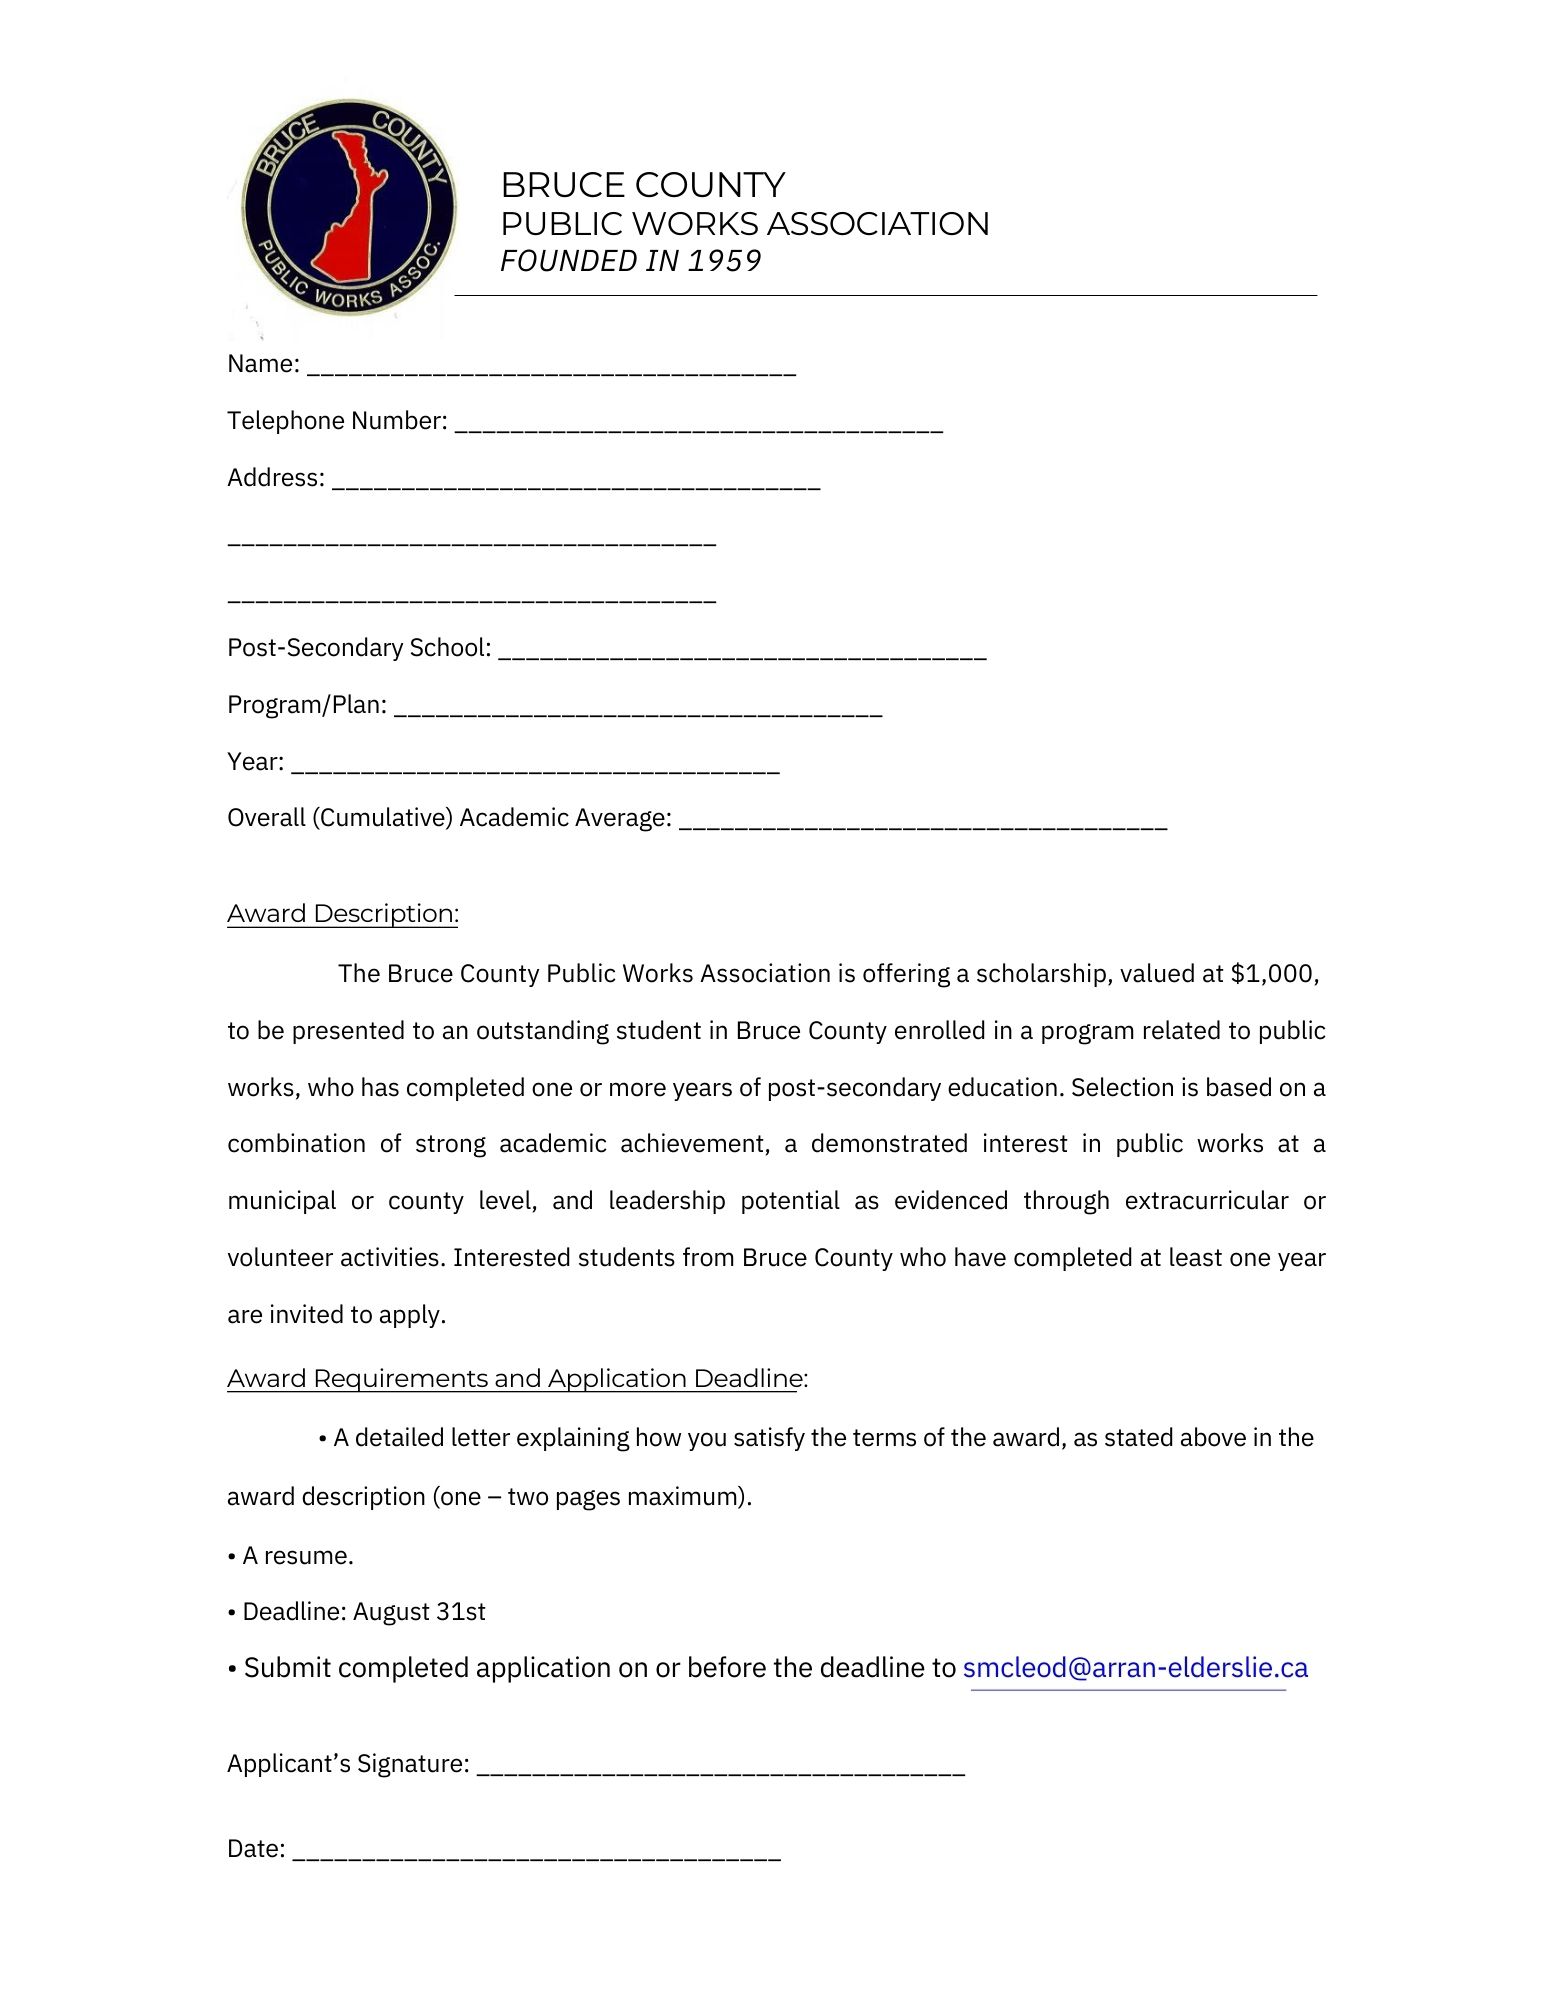 Bruce County Public Works Association 2023 Scholarship 2